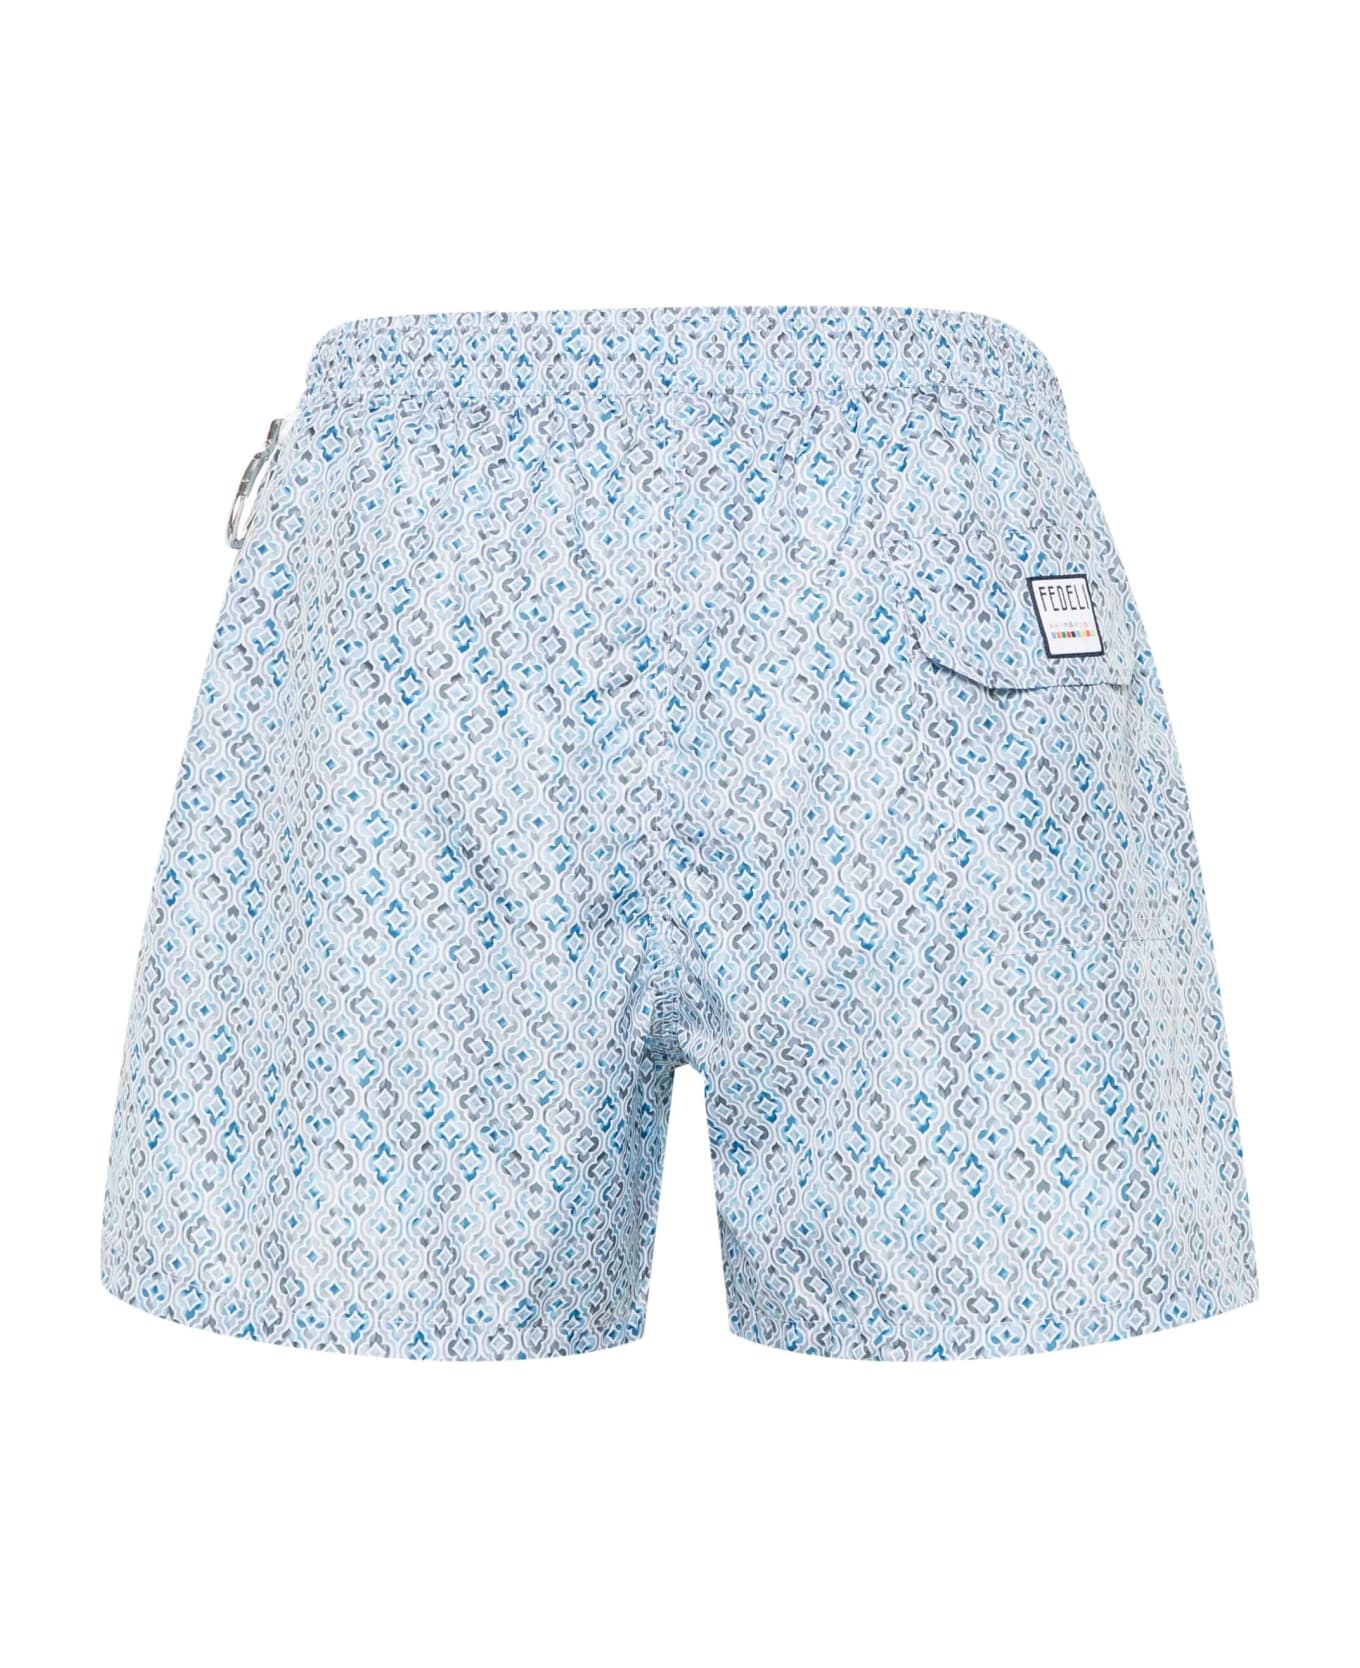 Fedeli Swim Shorts With Shaded Majolica Micro Pattern - Blue スイムトランクス